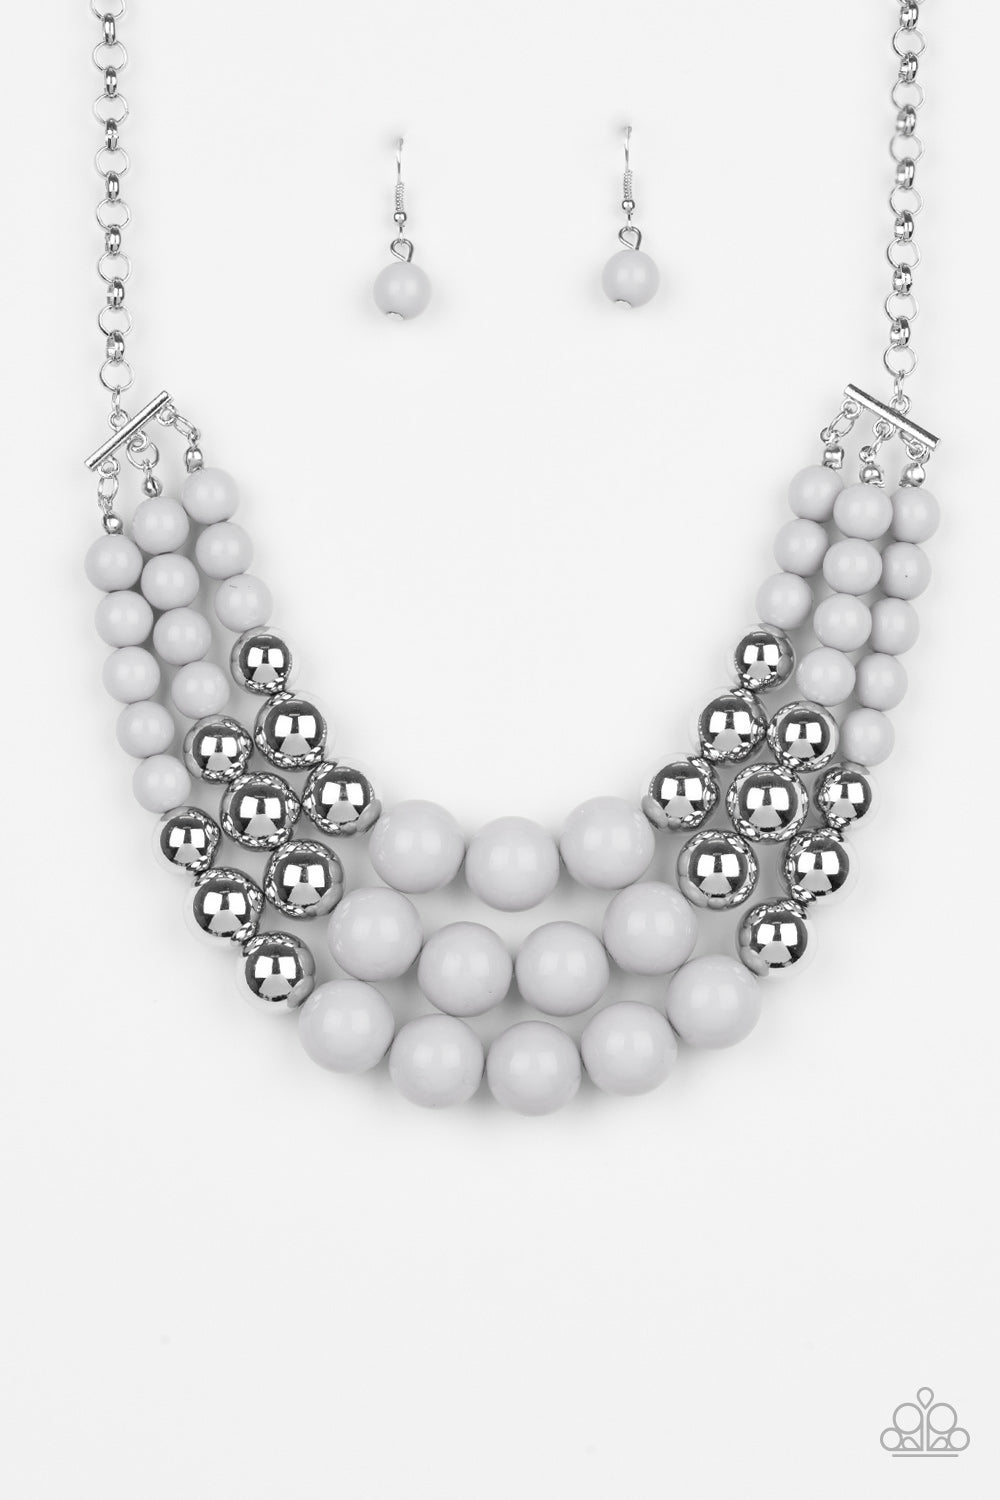 Paparazzi Accessories  - Dream Pop - #N146 Silver Necklace